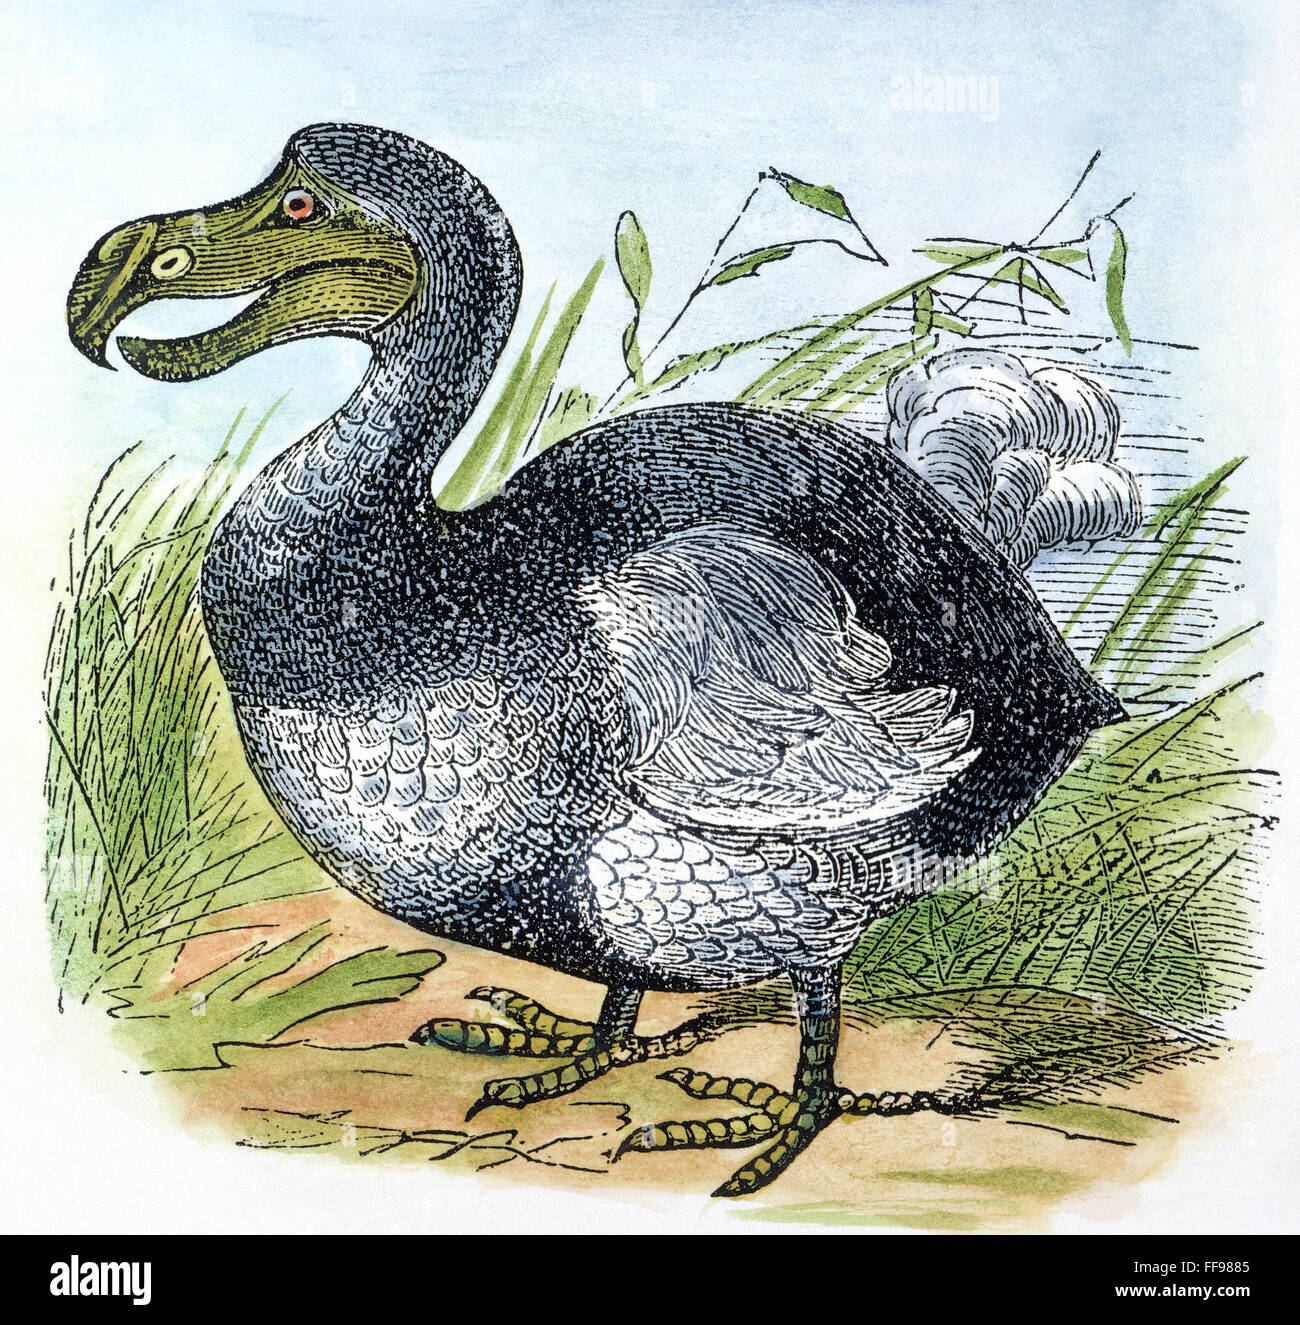 MAURITIUS DODO. /nThe Mauritius dodo (Raphus cucullatus), a now extinct flightless bird. Wood engraving, 1879. Stock Photo